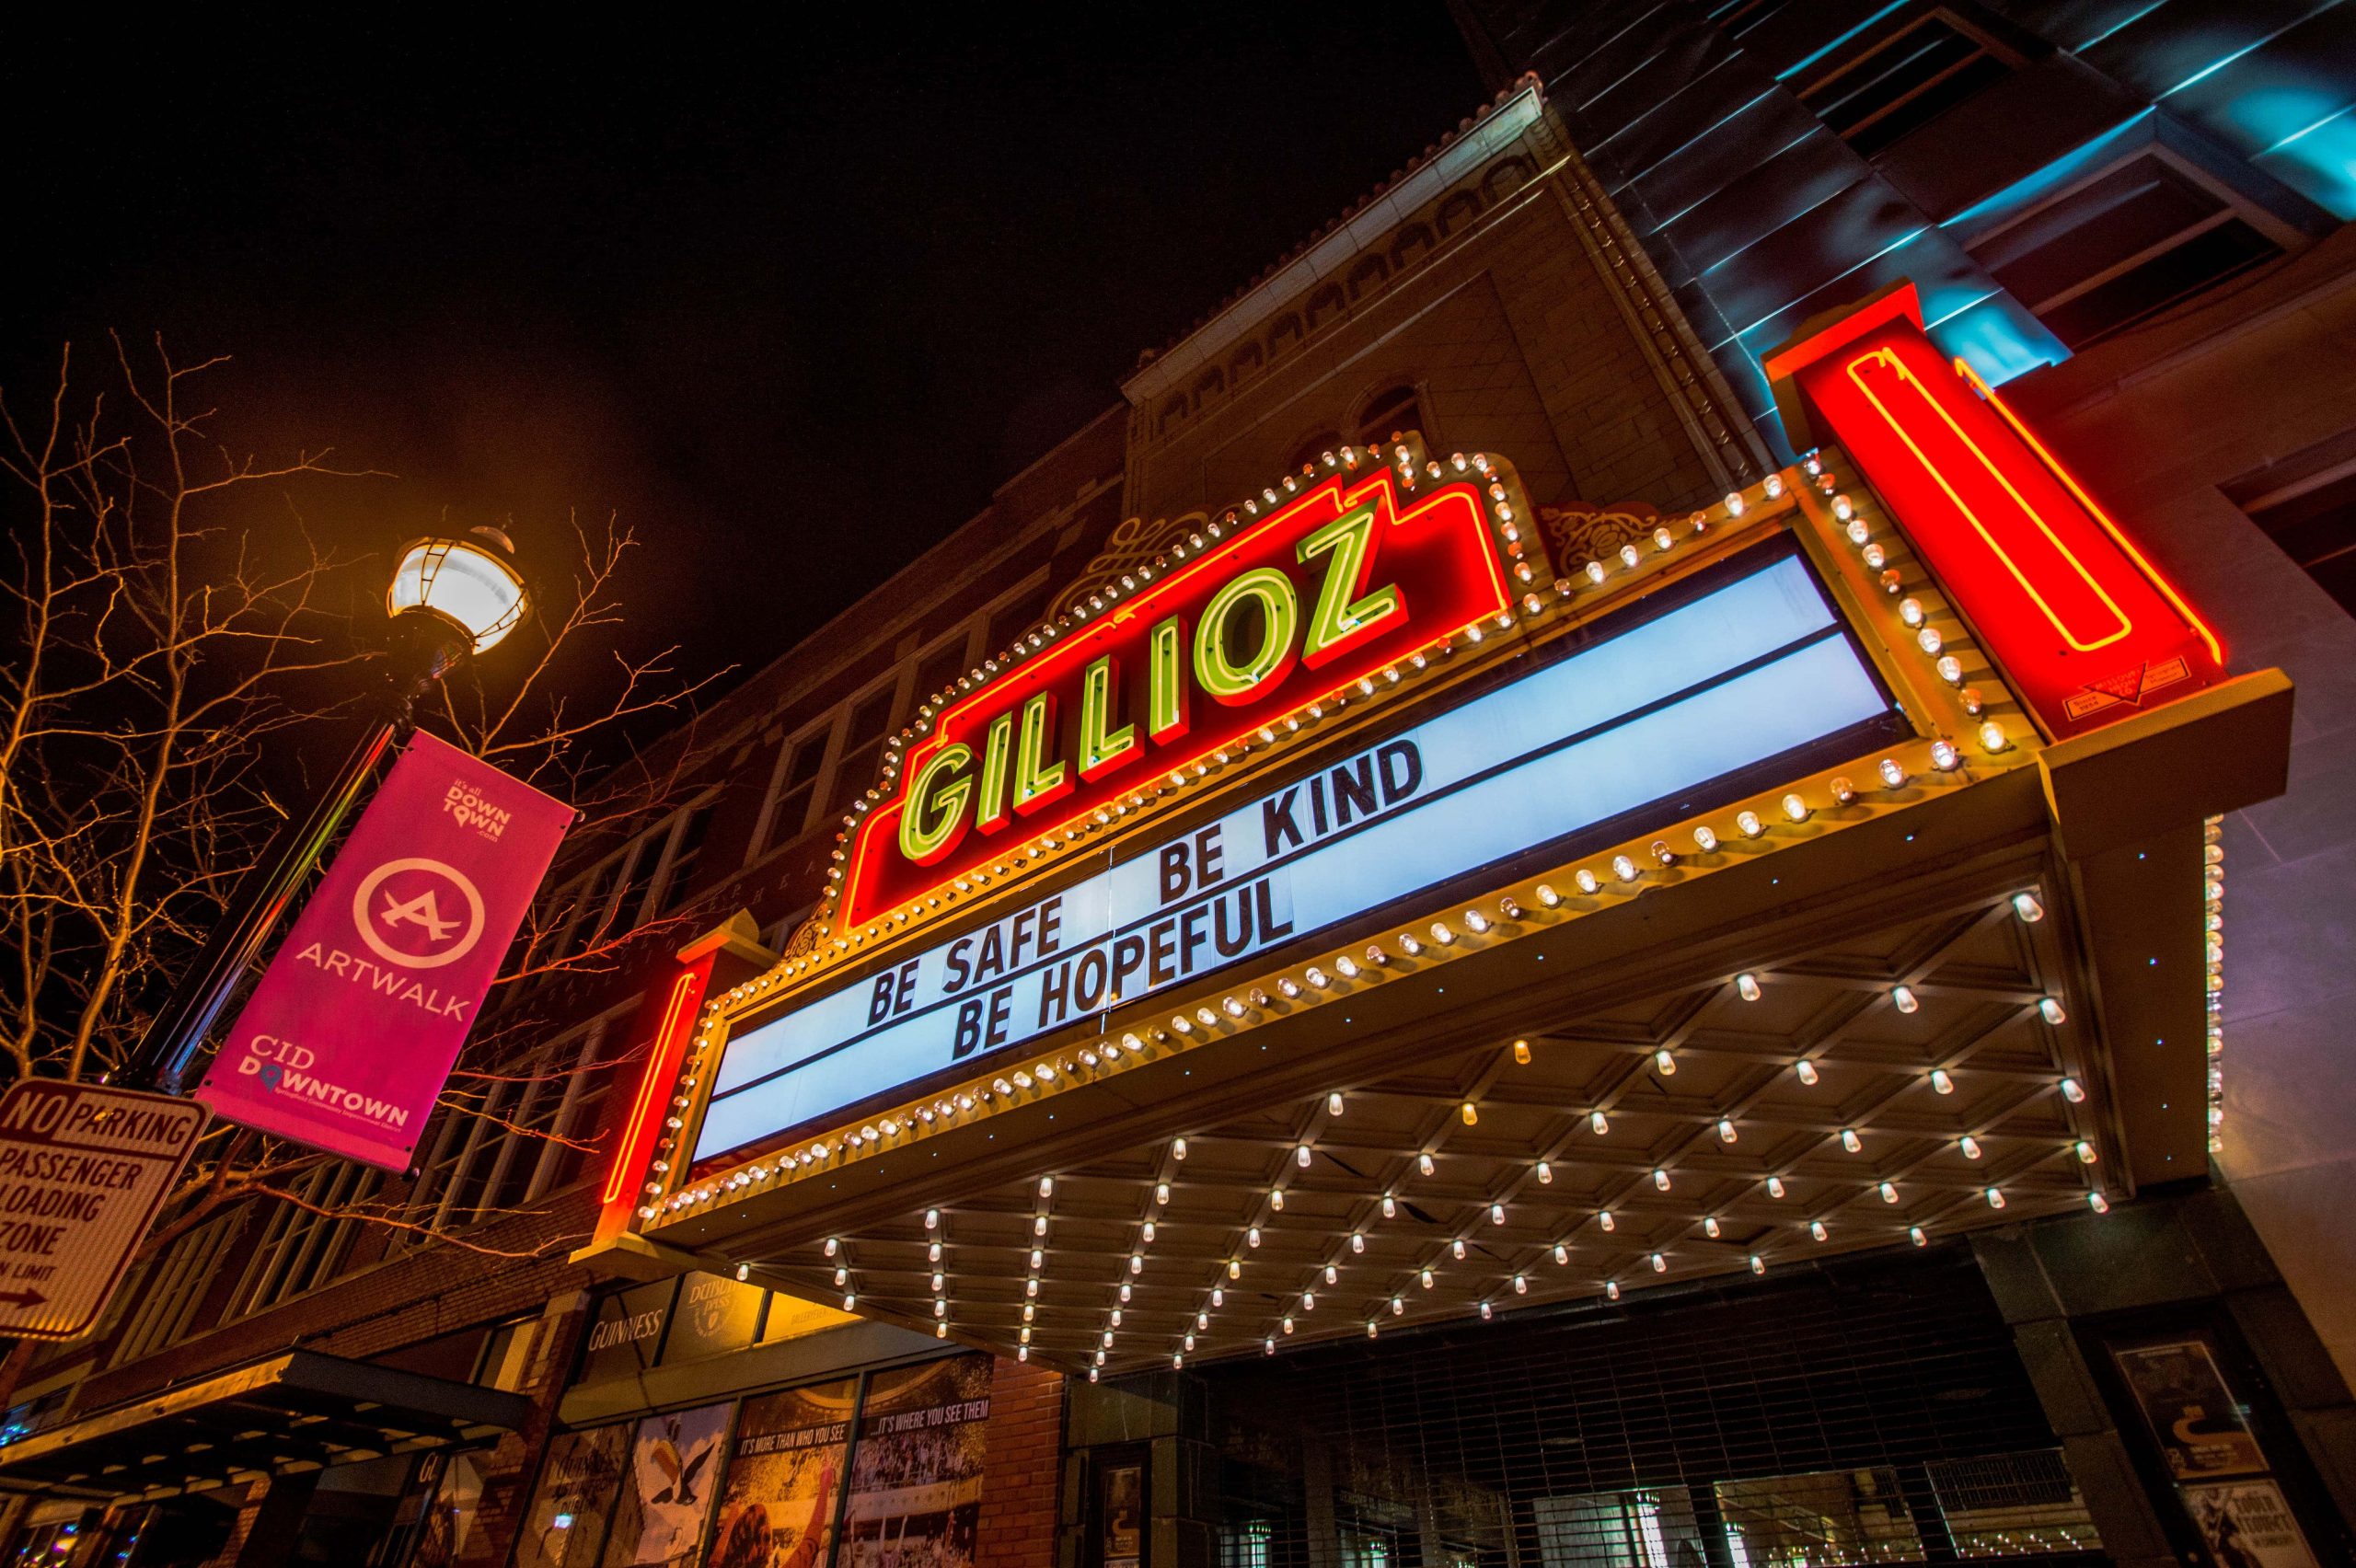 Featured Image: Gillioz Theatre marquee